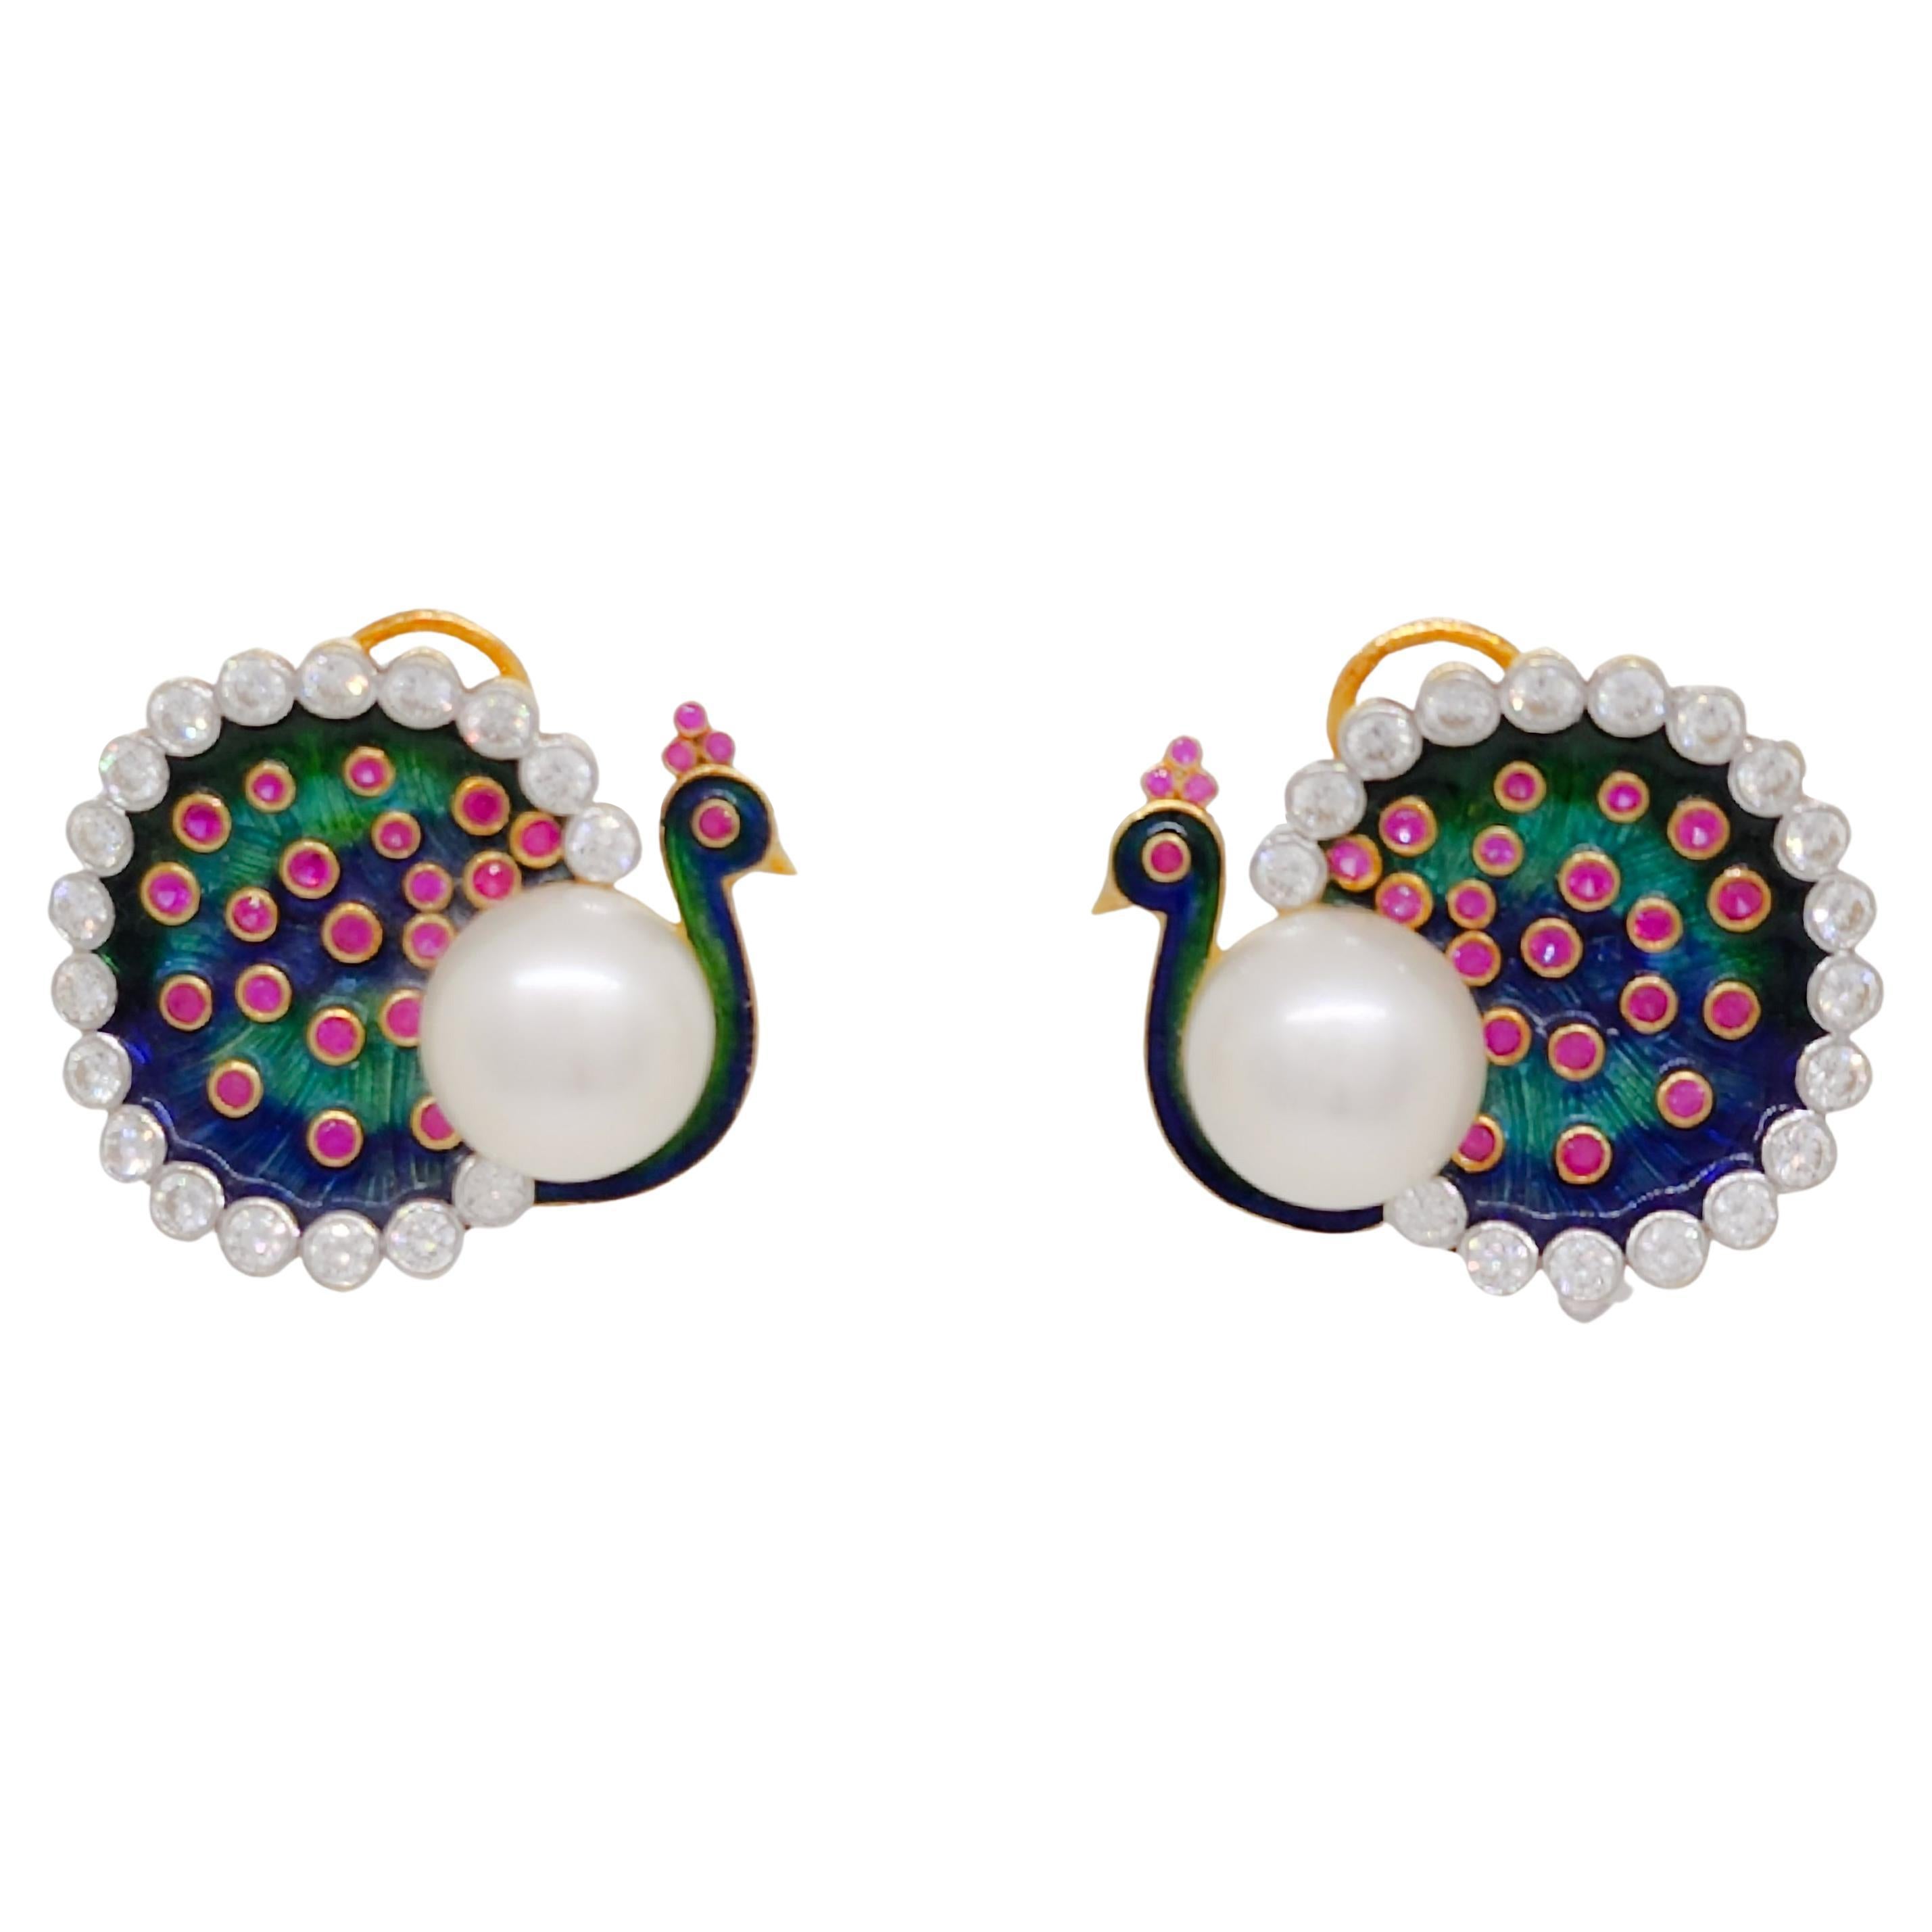 White Diamond, South Sea Pearl, and Enamel Peacock Earrings in 18k